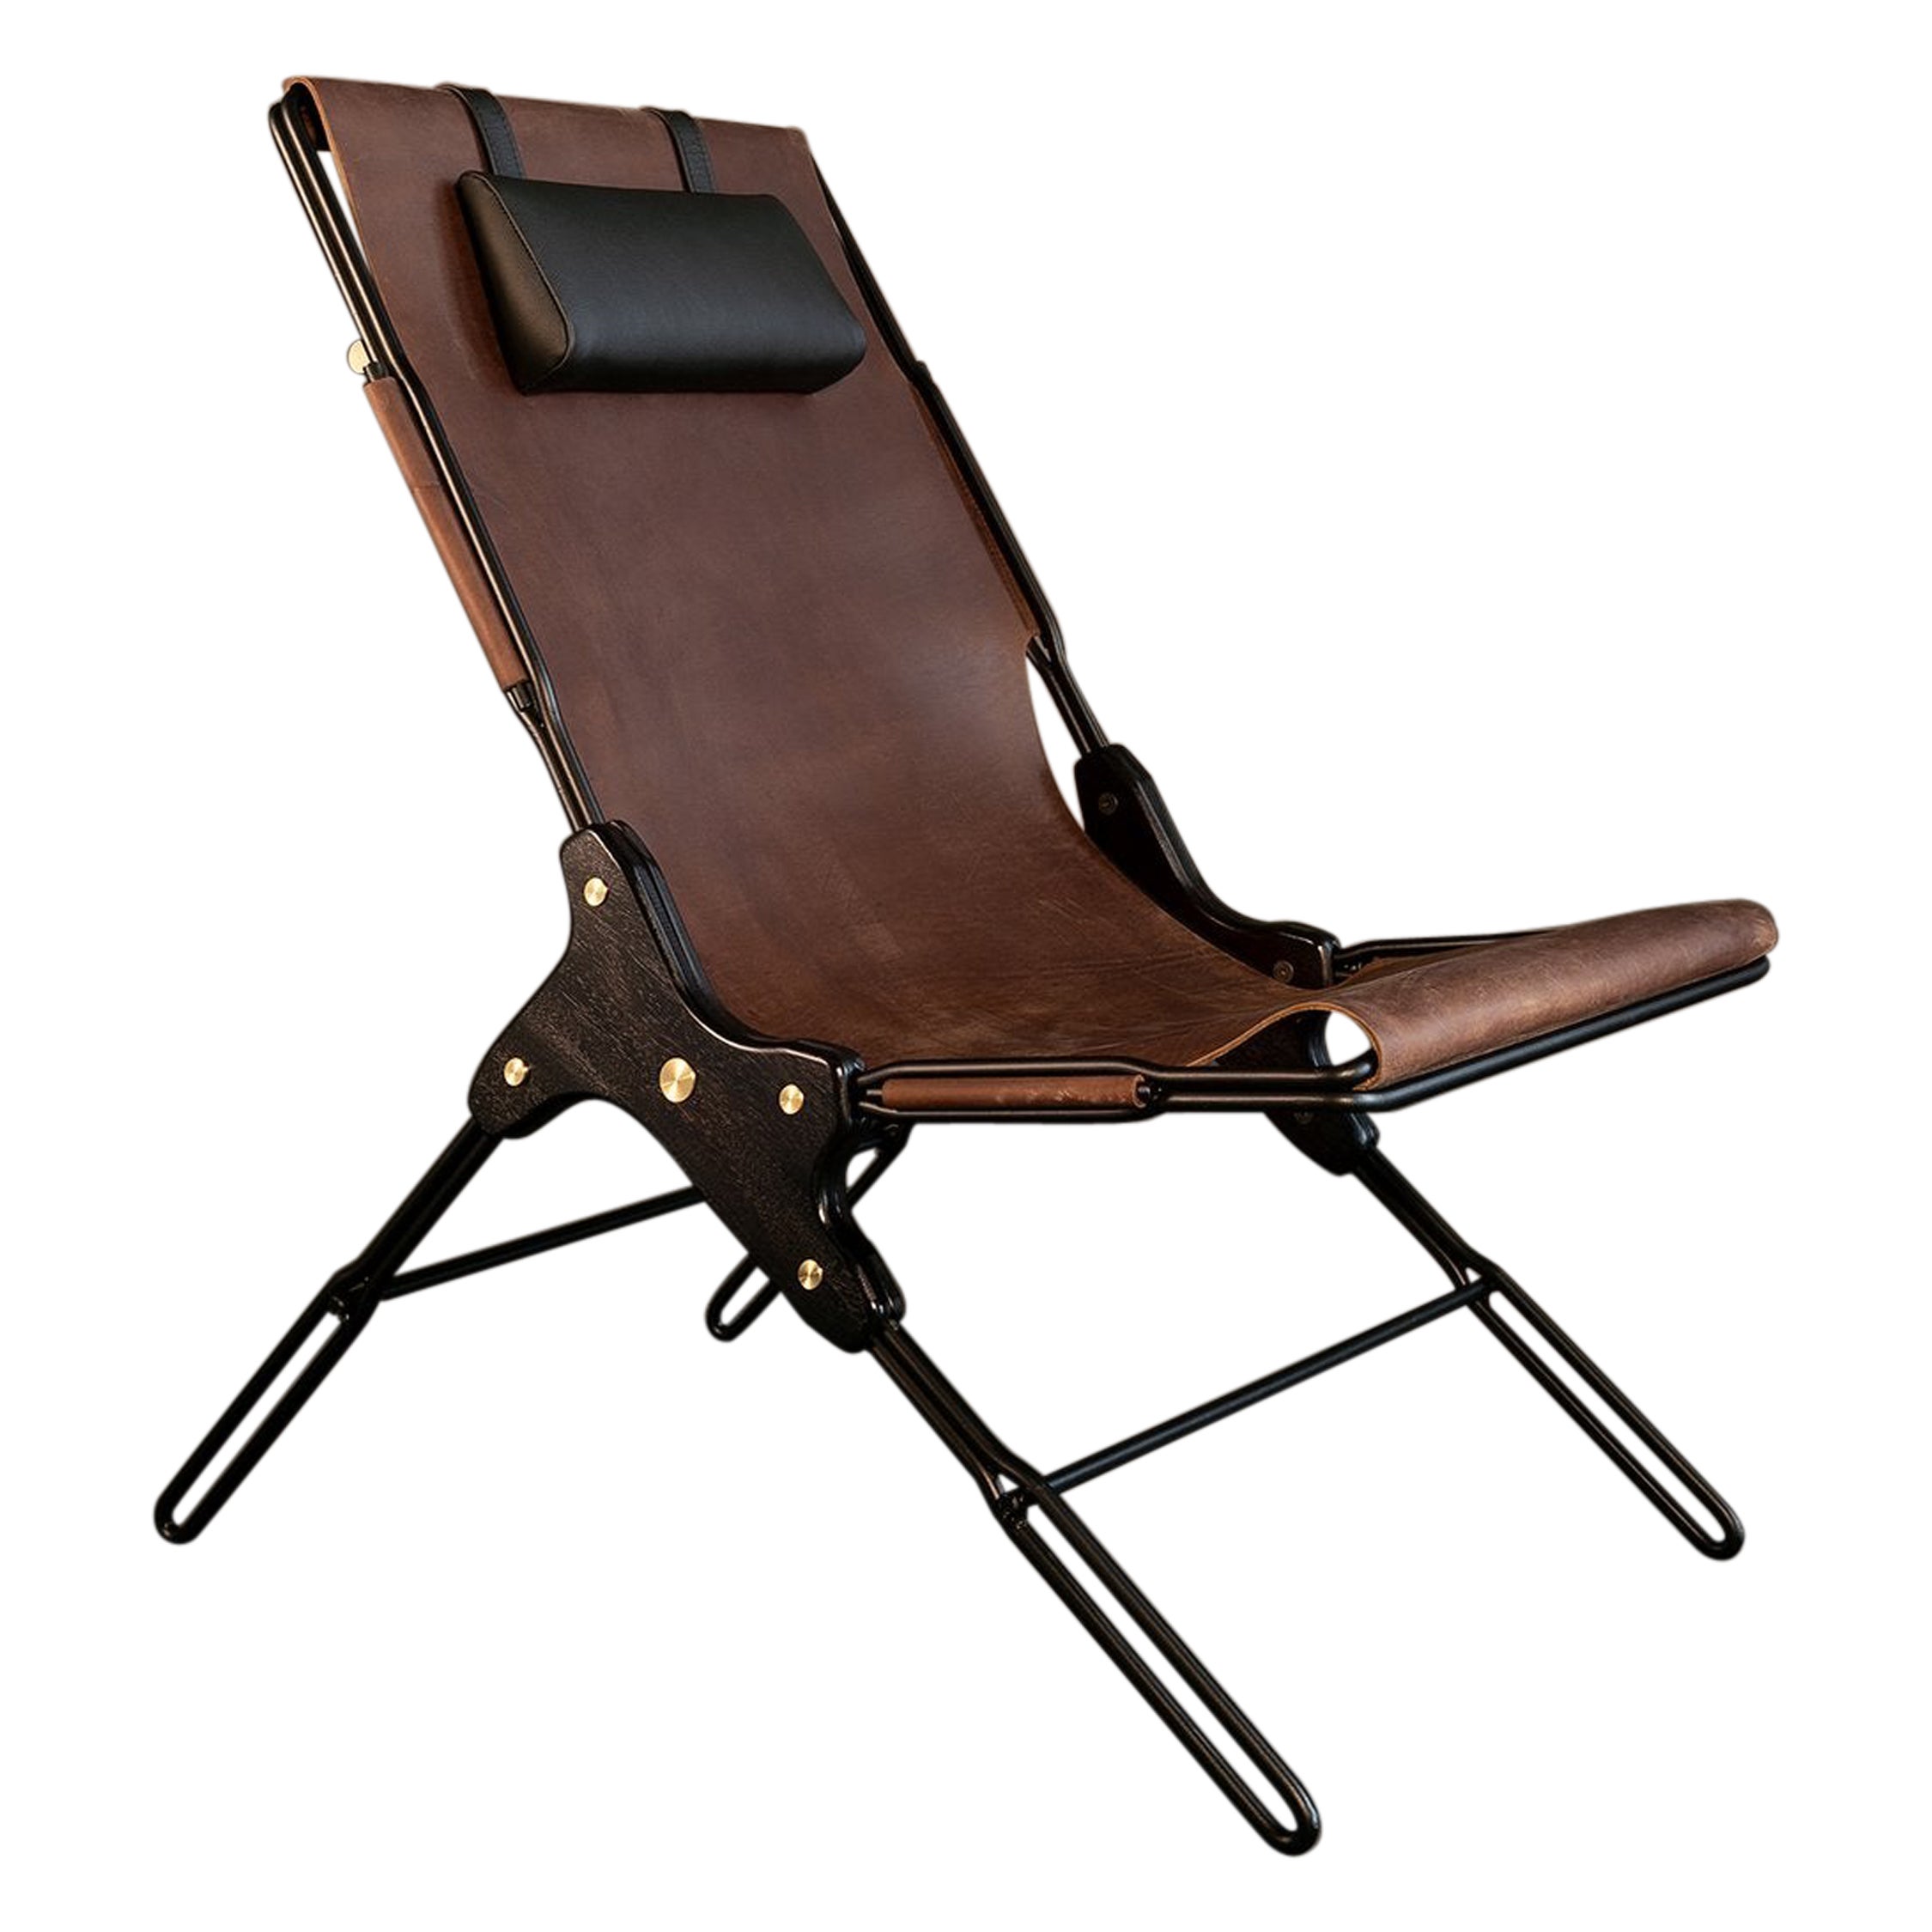 Perfidia_01 Lounge Chair Brown von ANDEAN, REP von Tuleste Factory